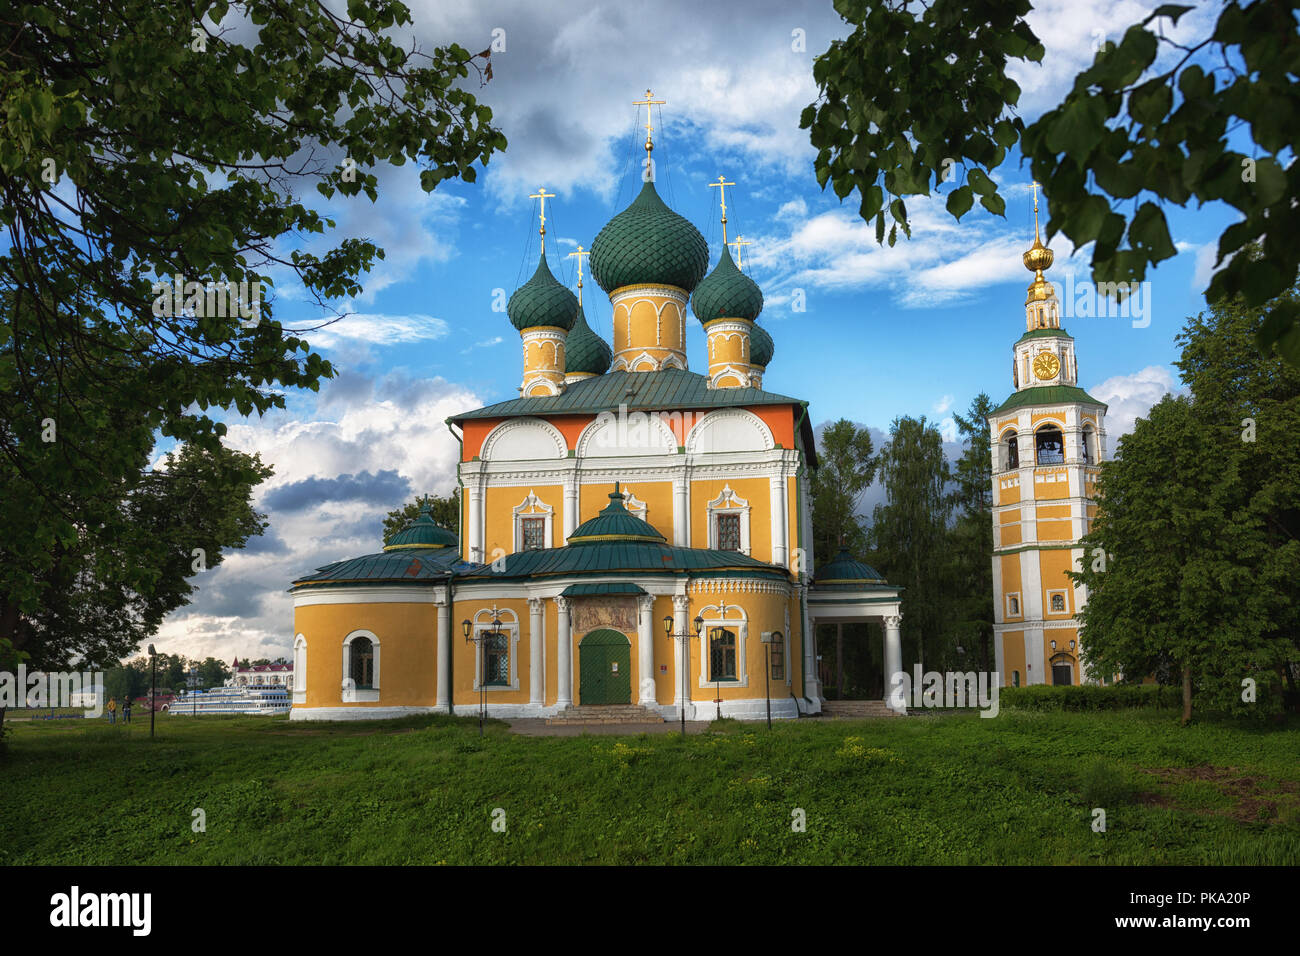 Spaso-Preobrazhensky Cathedral in Uglich, Russia Stock Photo